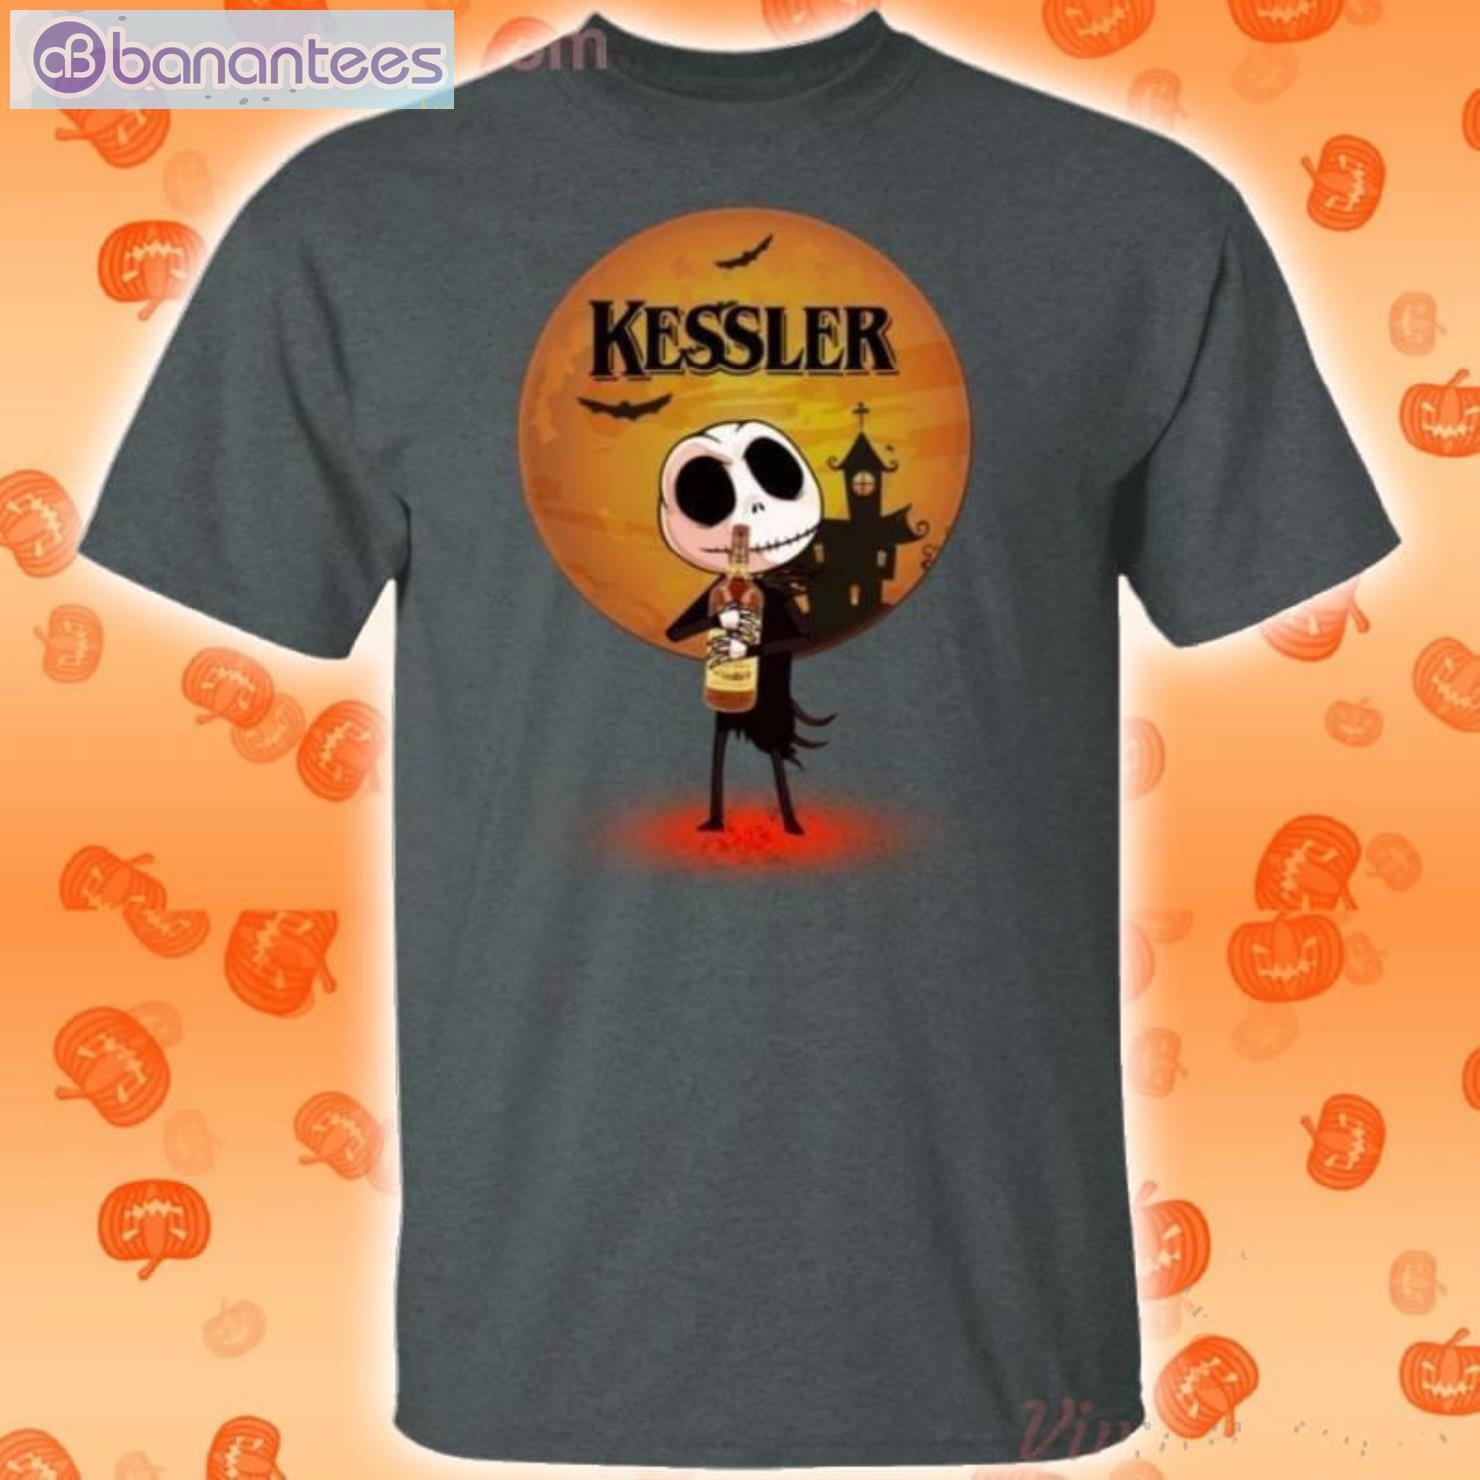 Jack Skellington Holding Kessler American Whisky Halloween T-Shirt Product Photo 2 Product photo 2